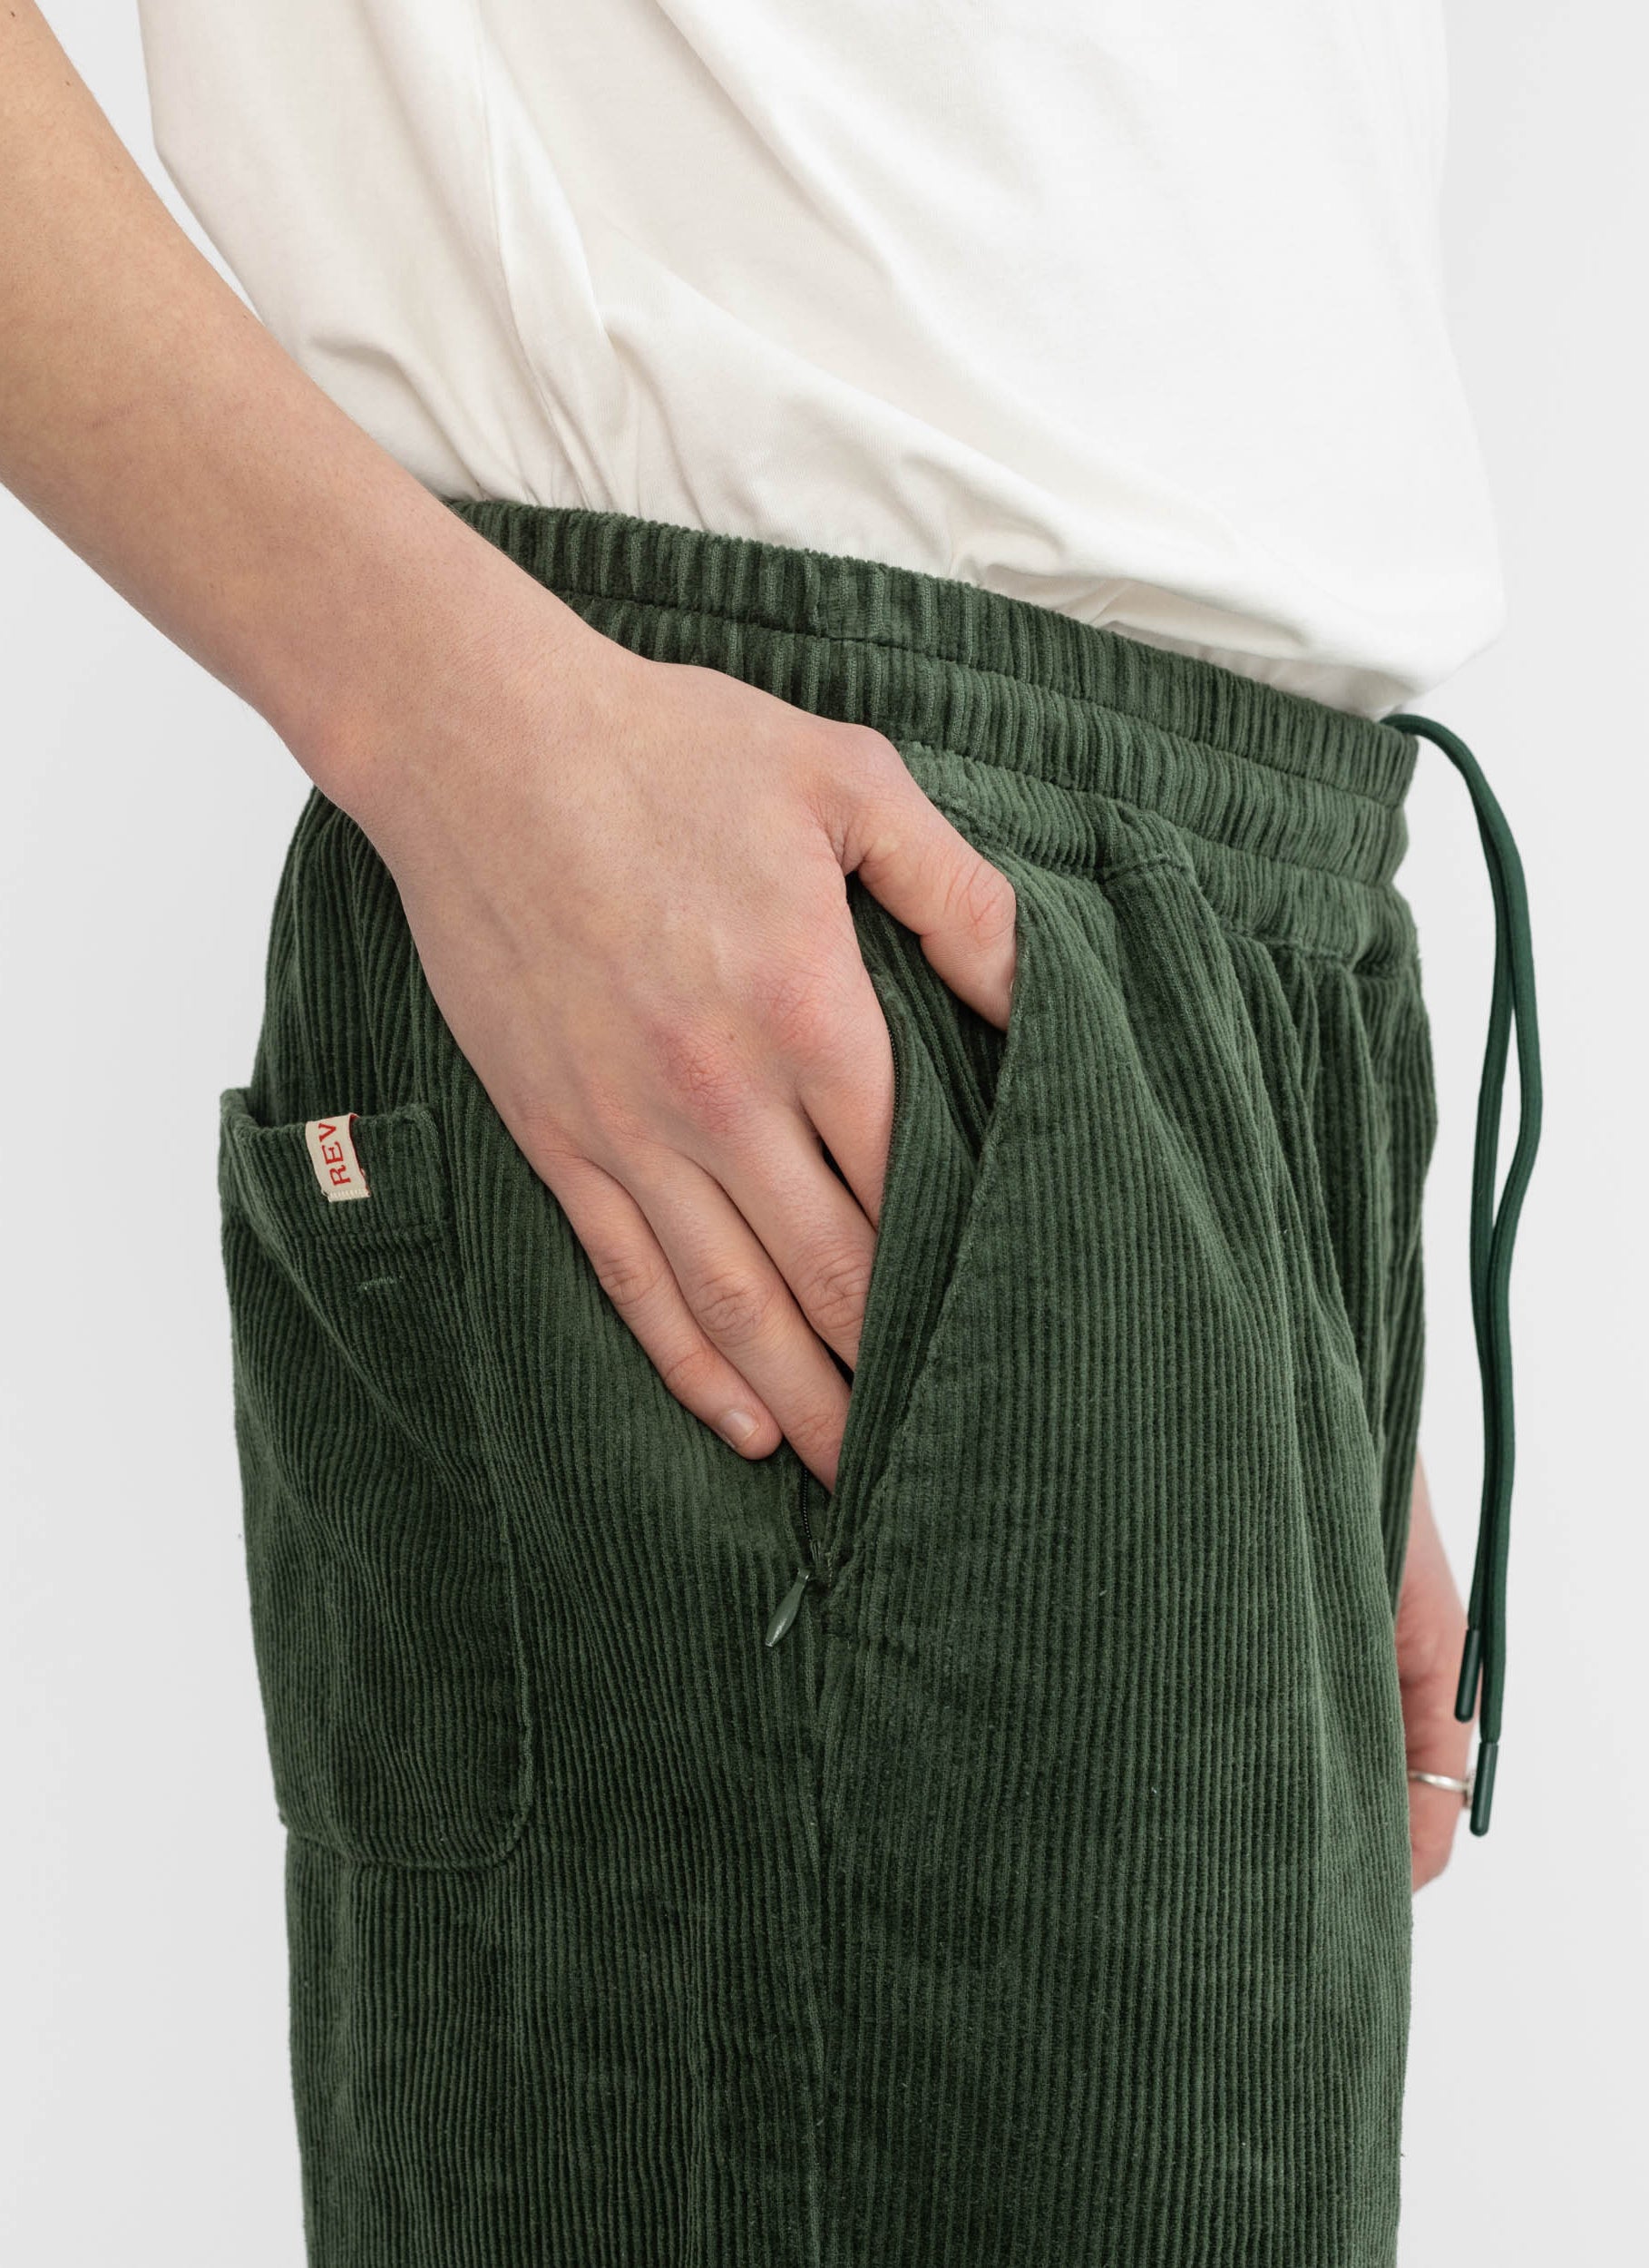 Revolution Casual Trousers - Dark Green Cord